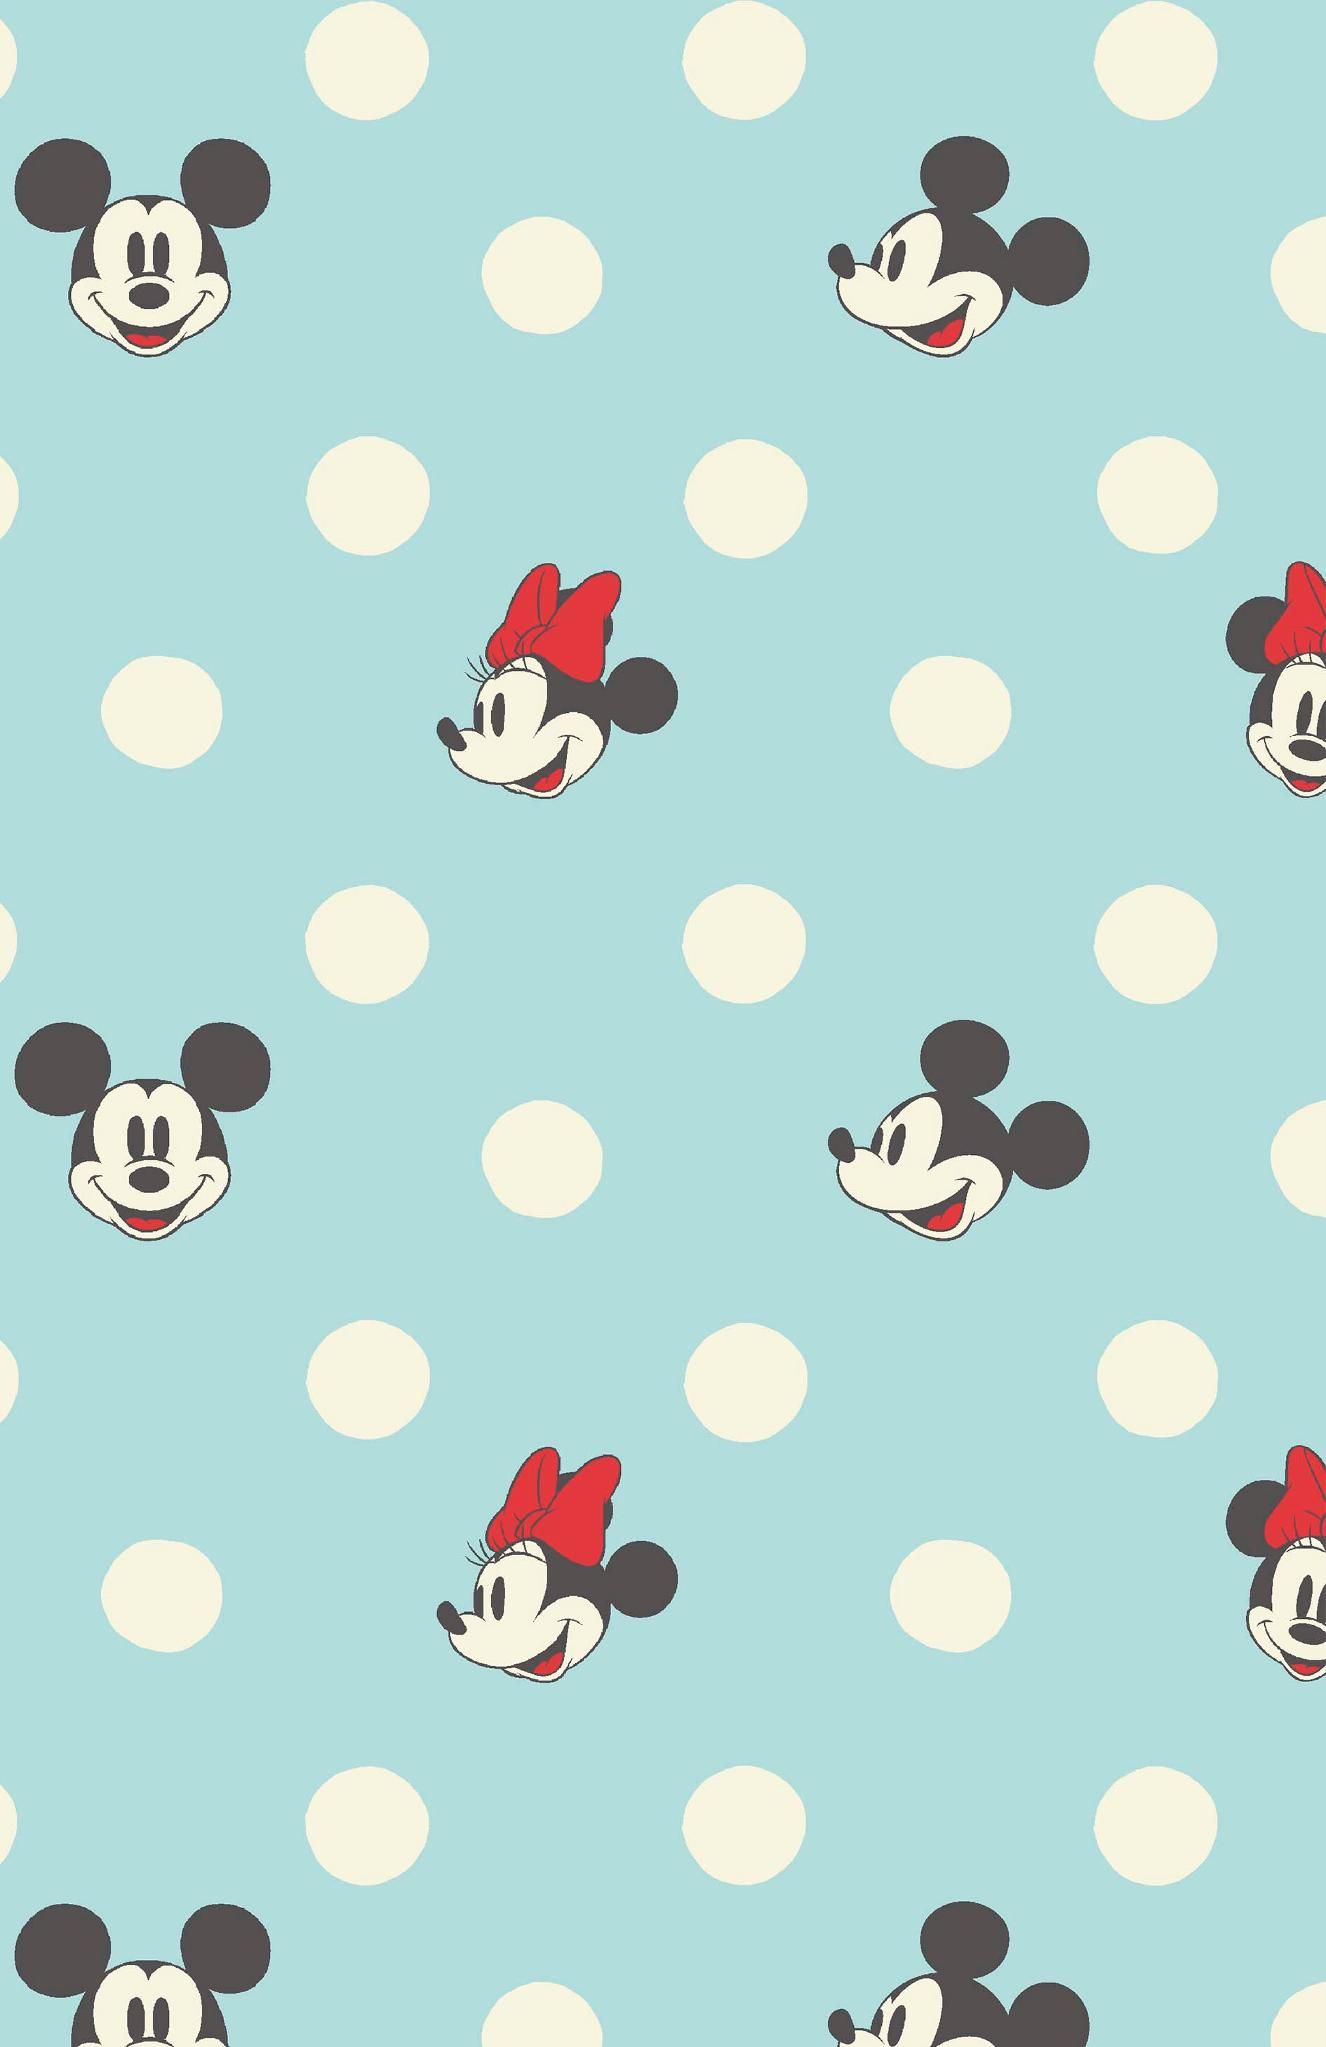 Mickey Mouse Wallpaper Design. Design Wallpaper, Neon Design Wallpaper and Futuristic Design Wallpaper